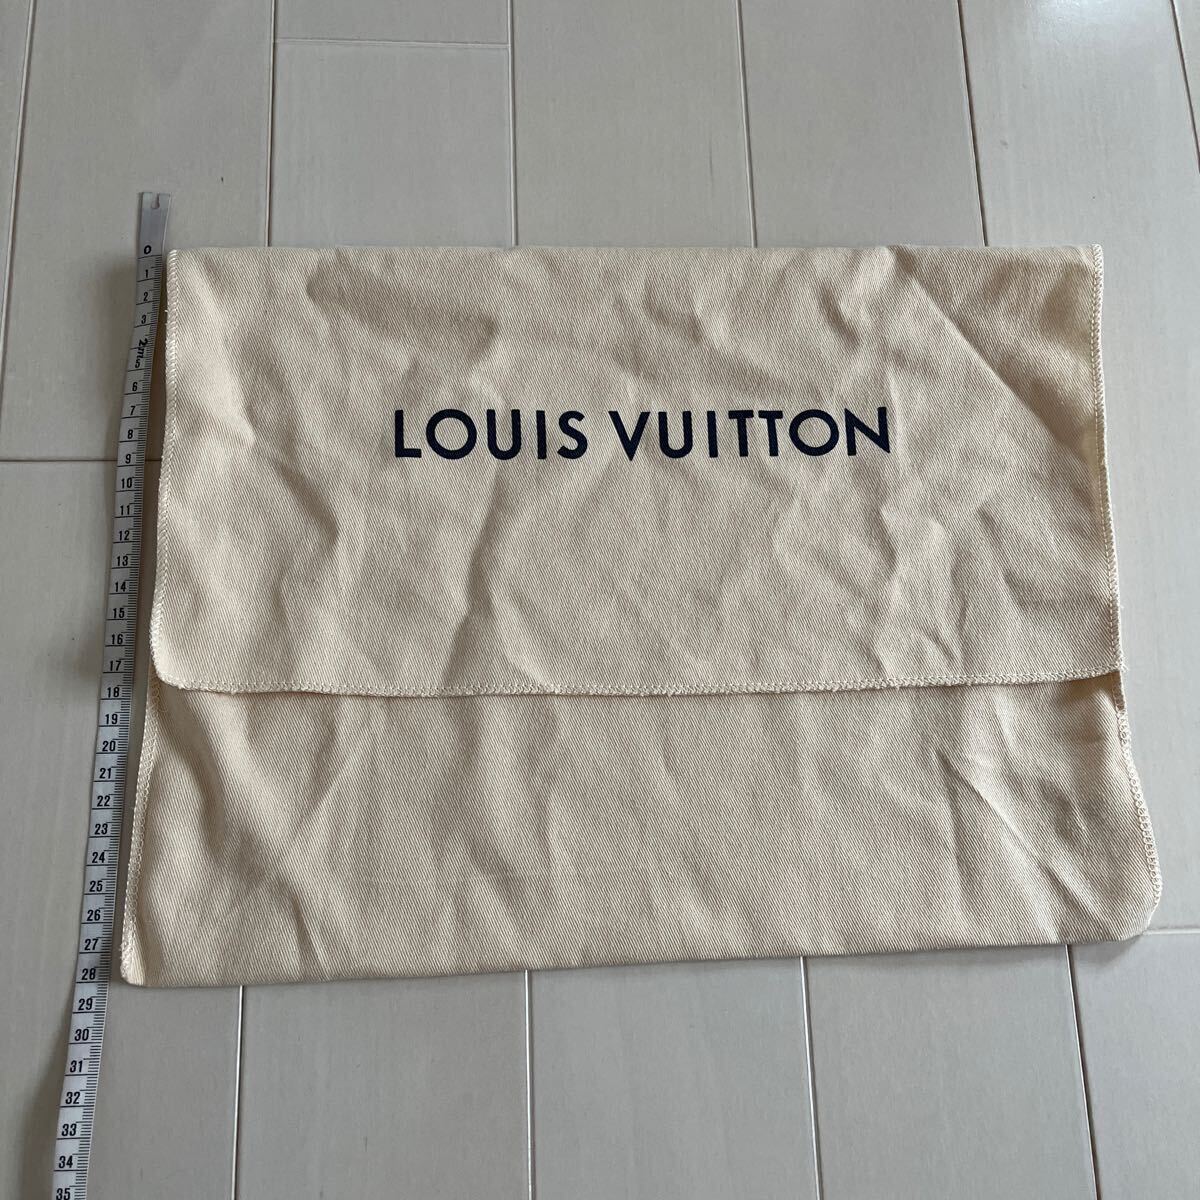 LOUIS VUITTON 保存袋 ルイヴィトン ヴィトン 布袋 付属品の画像3